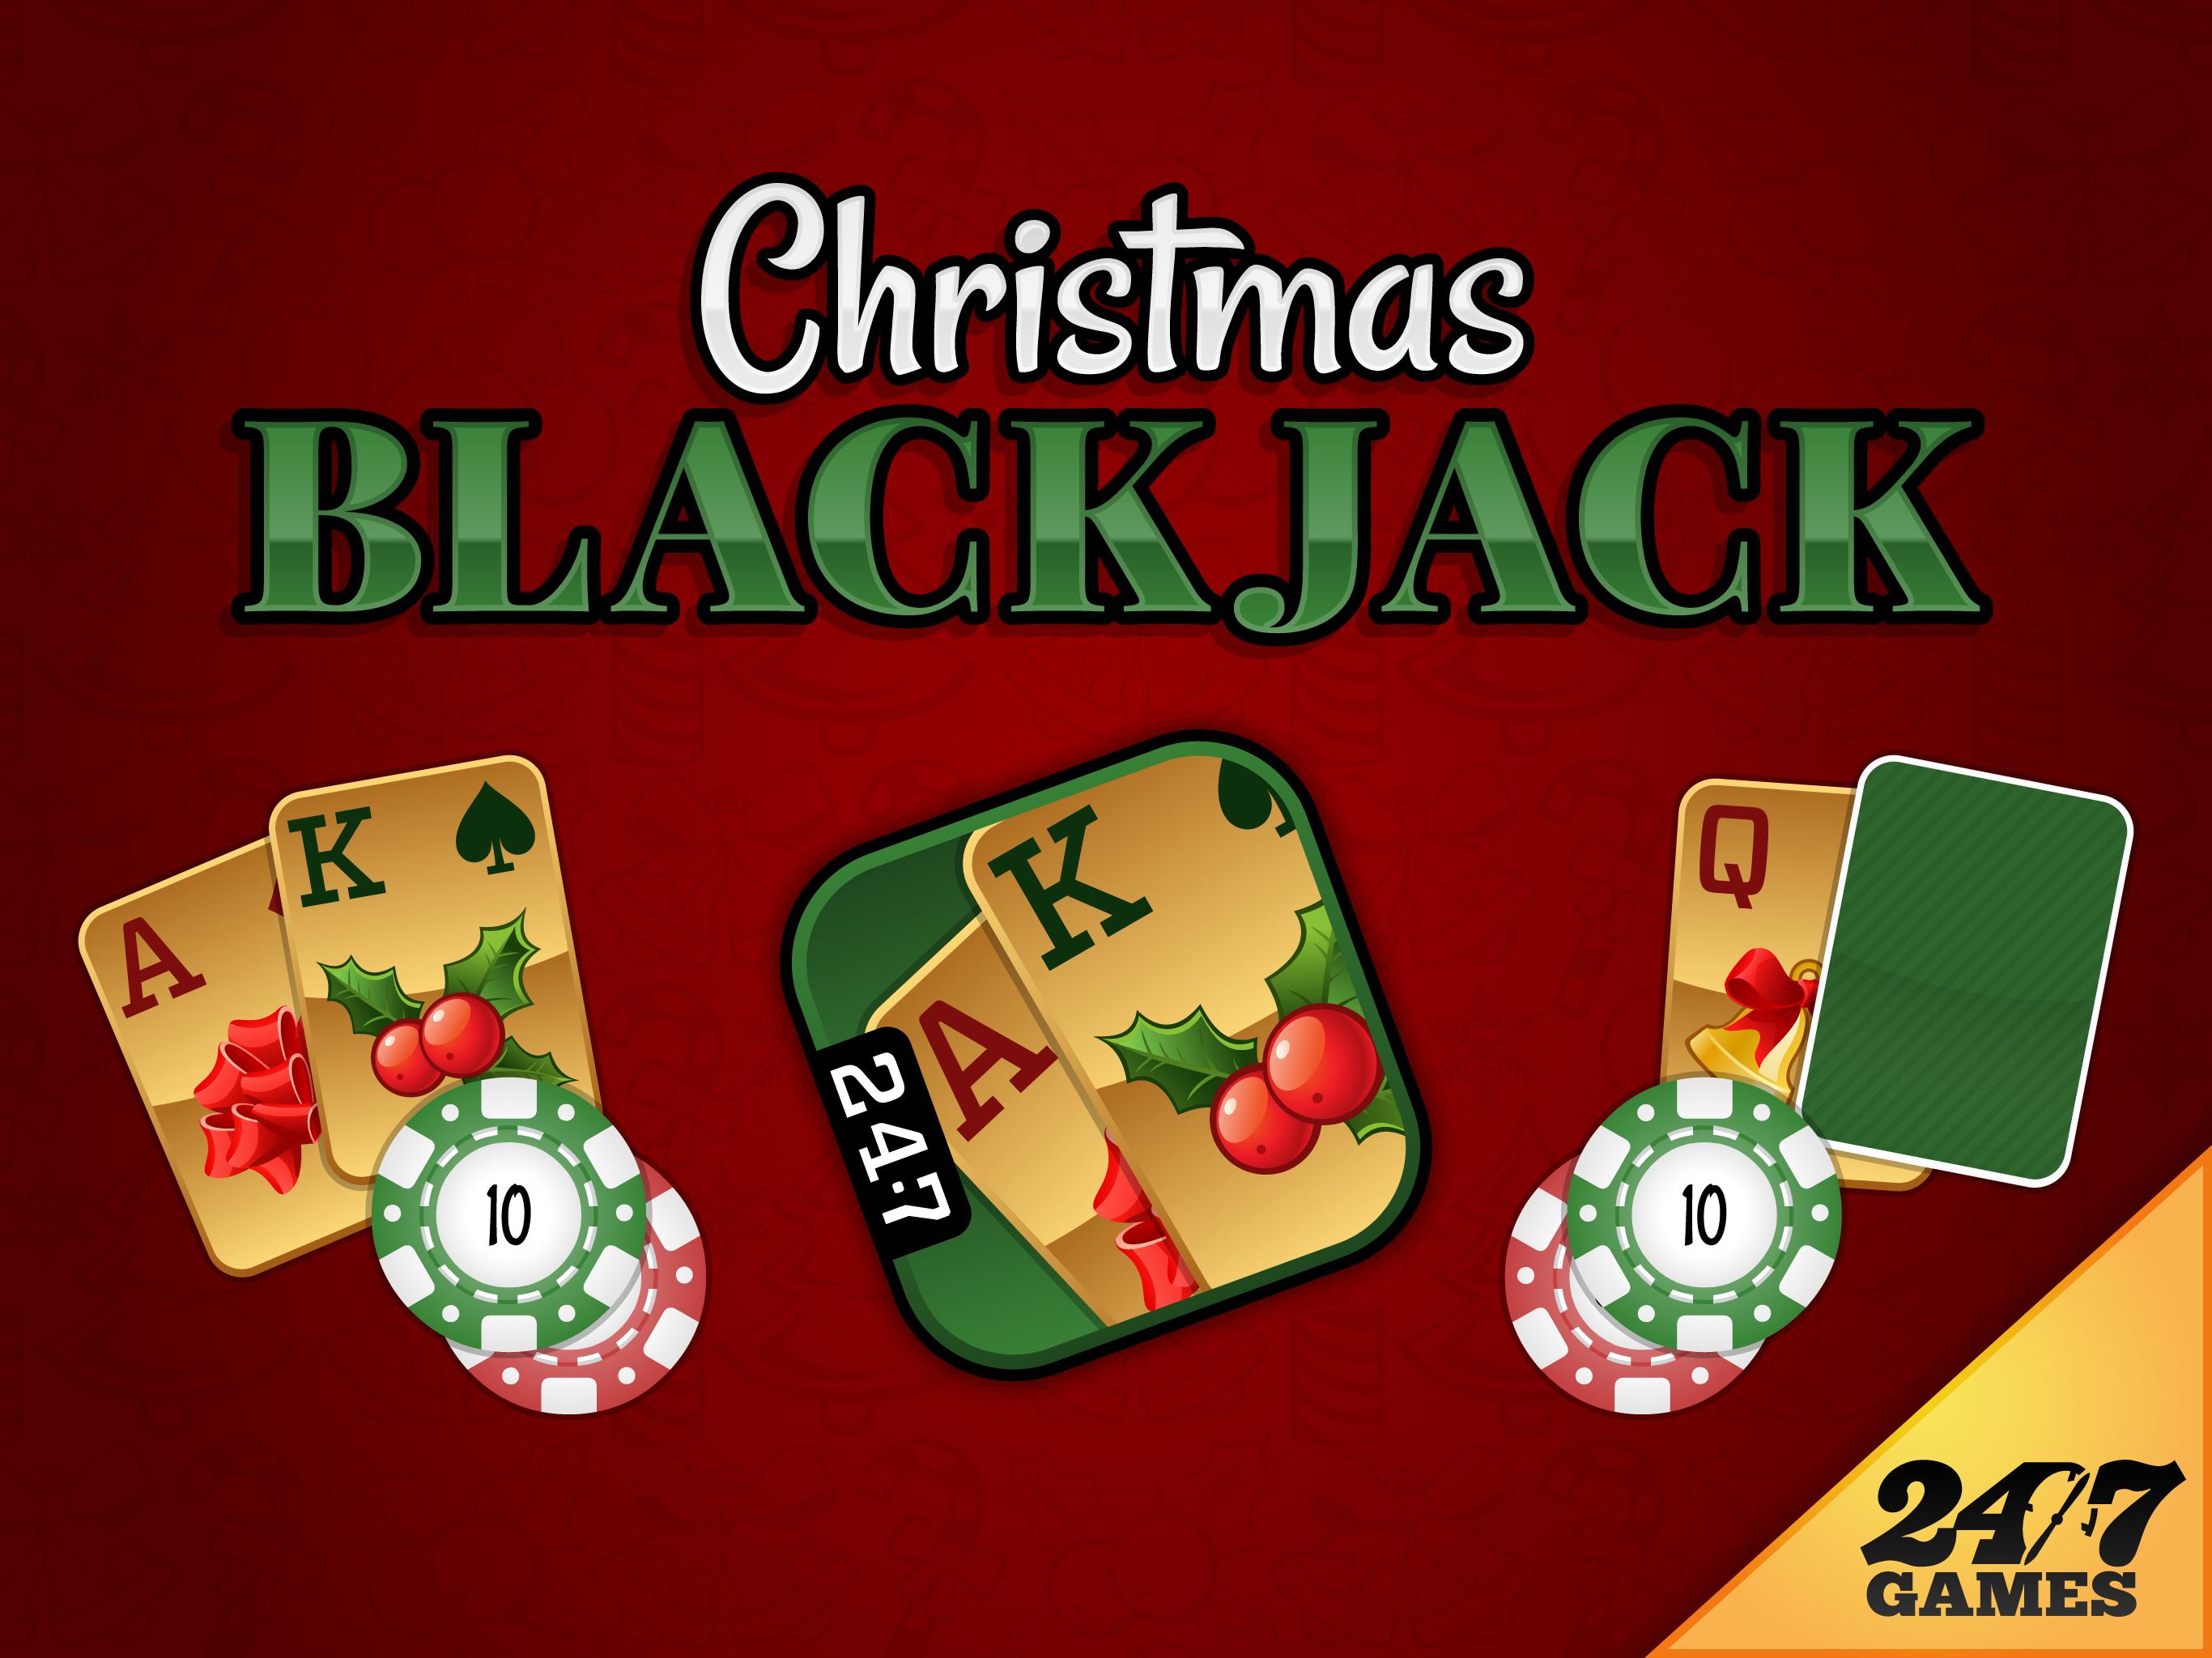 Christmas Blackjack for Android - APK Download